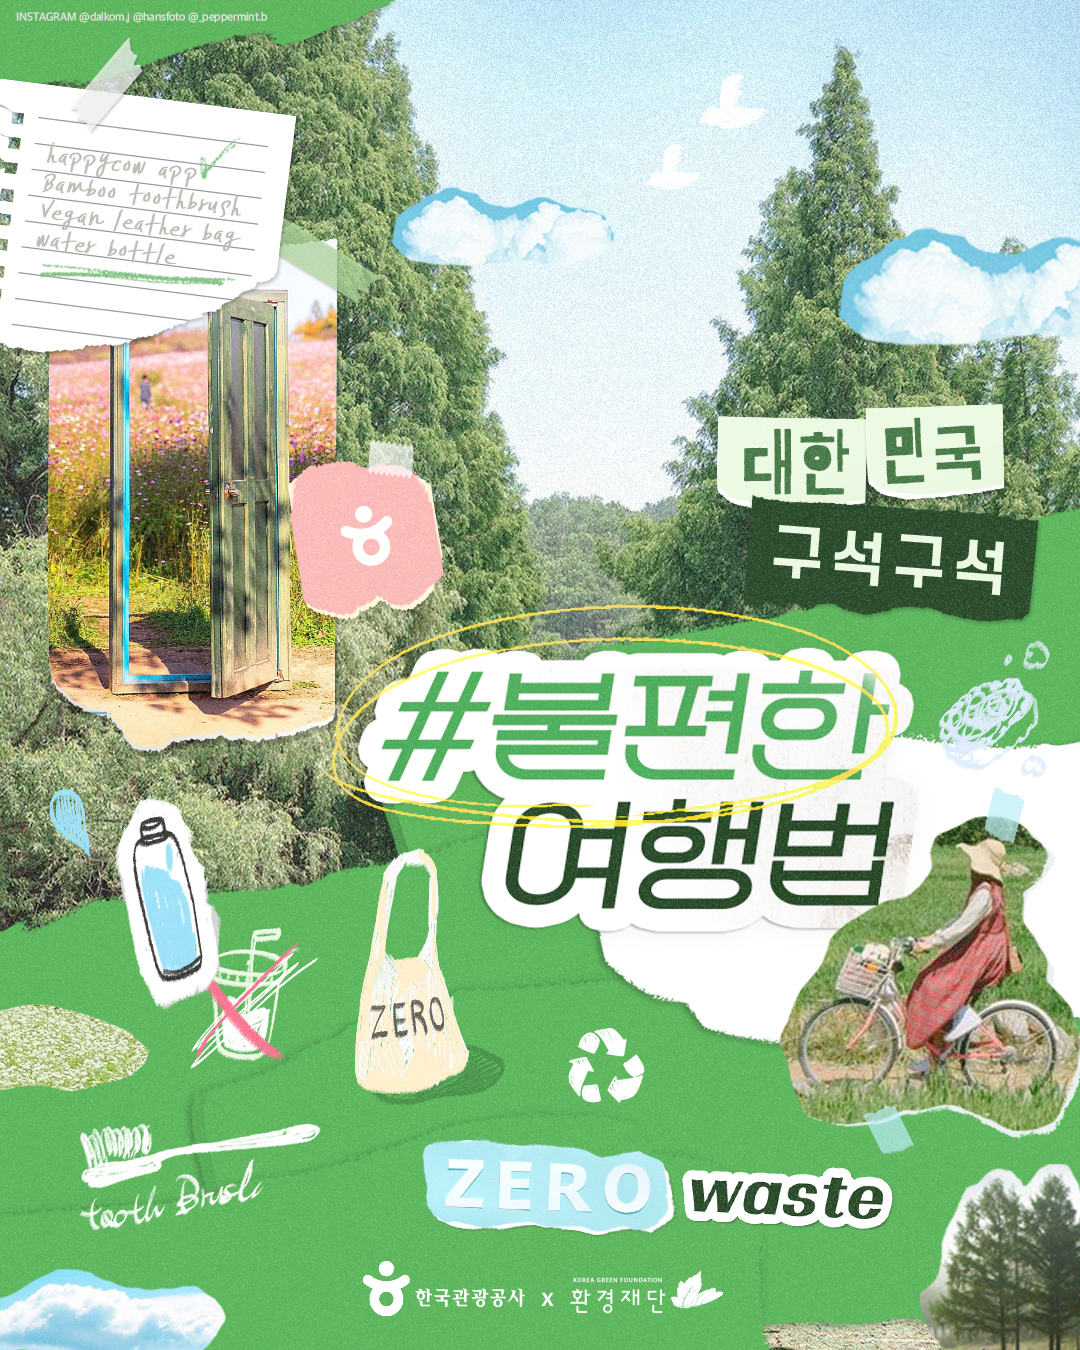 Campaign poster for “Inconvenient Travel Tips“ (Korea Tourism Organization)